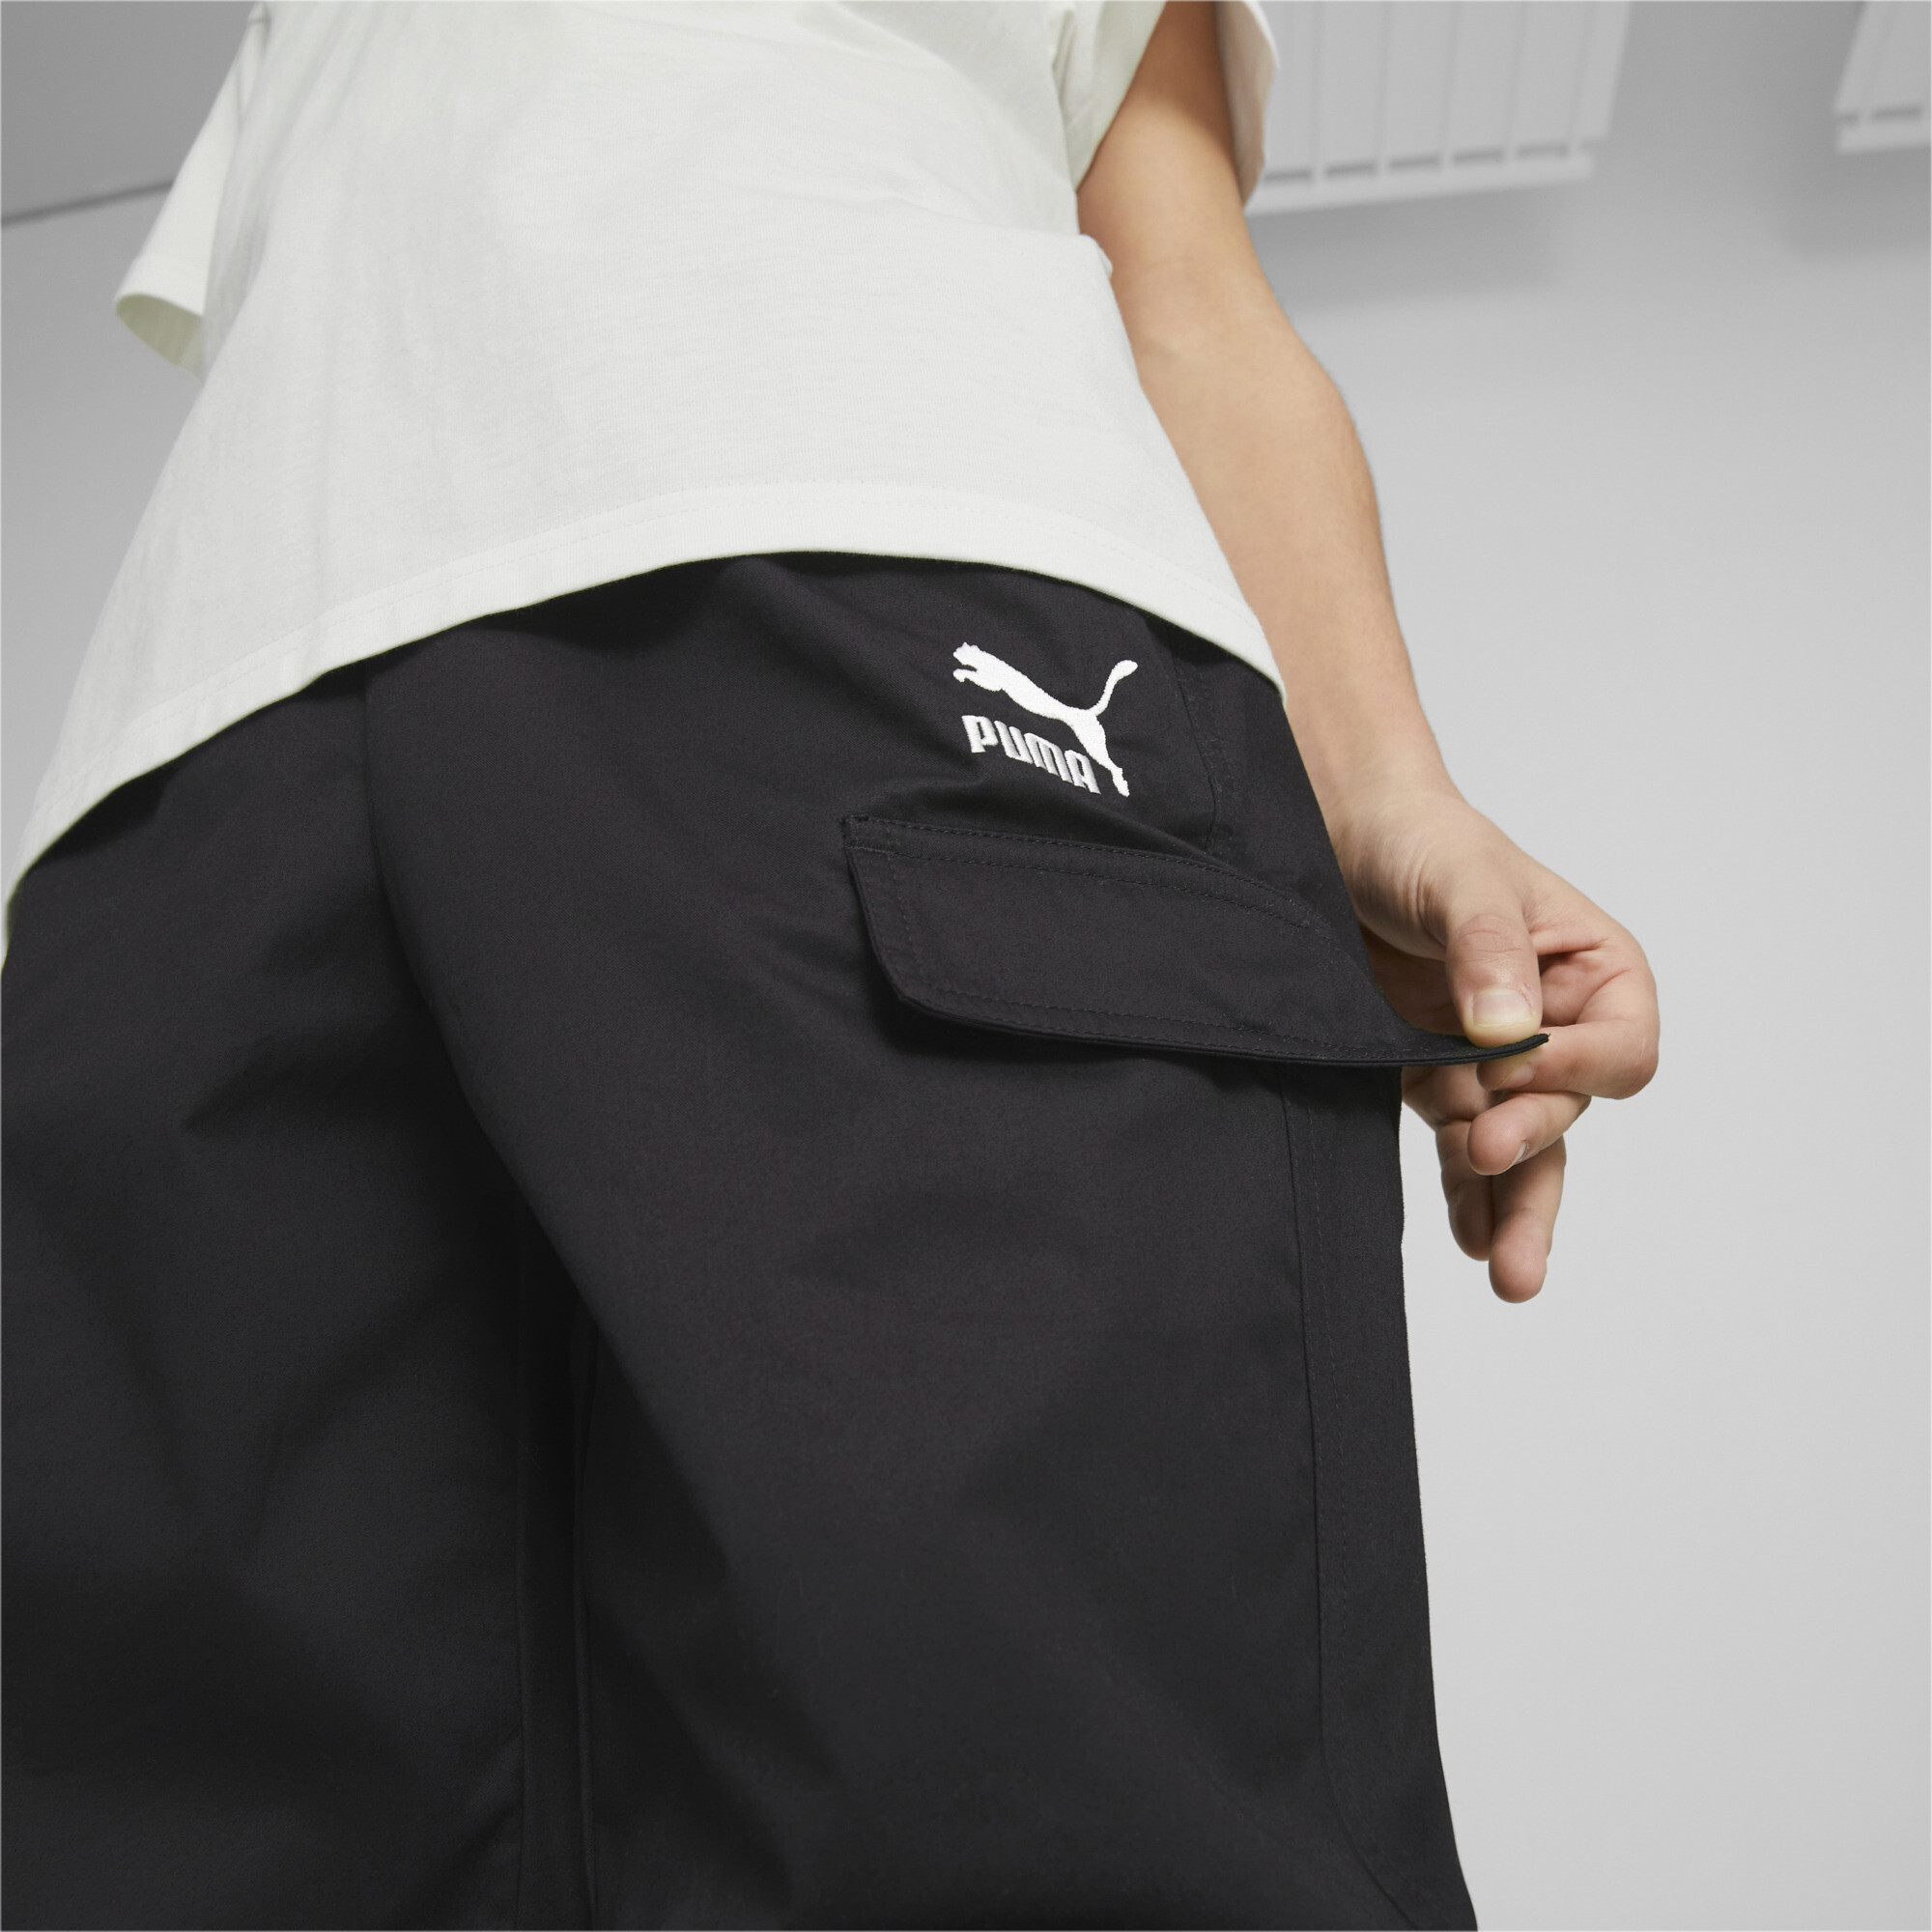 Puma Classics Woven Sweatpants Youth, Black, Size 15-16Y, Clothing